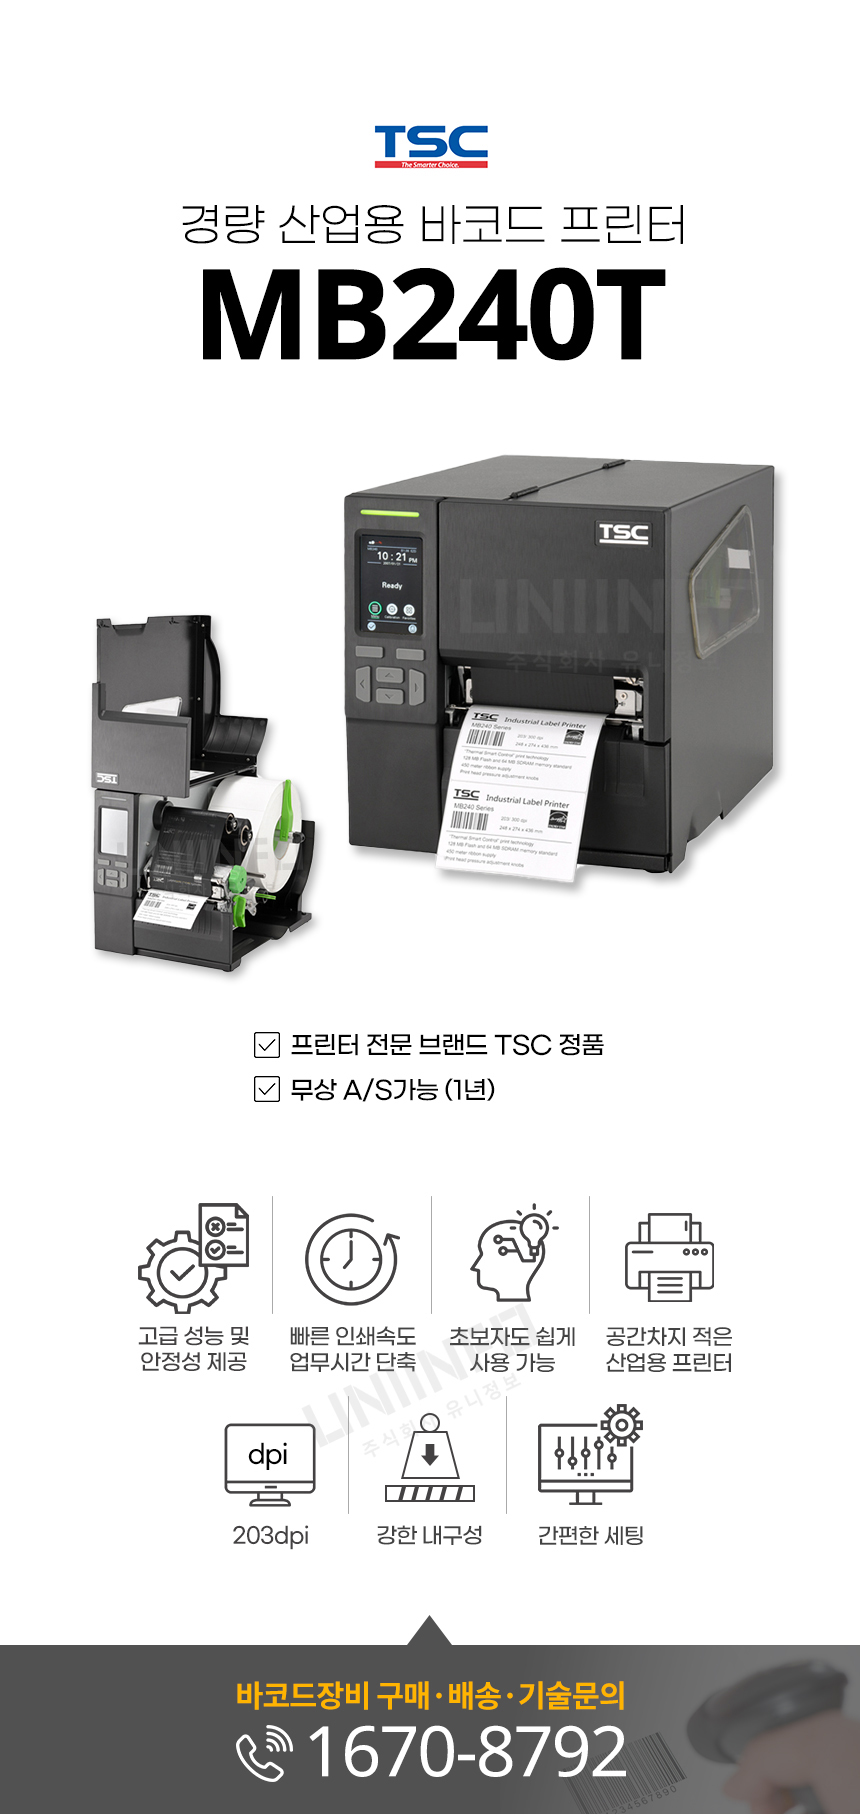 tsc MB240T 경량 산업용 바코드 프린터 무상 as 가능 1년 강한 내구성 간편한 세팅 해상도 203dpi 빠른 인쇄속도 업무시간 단축